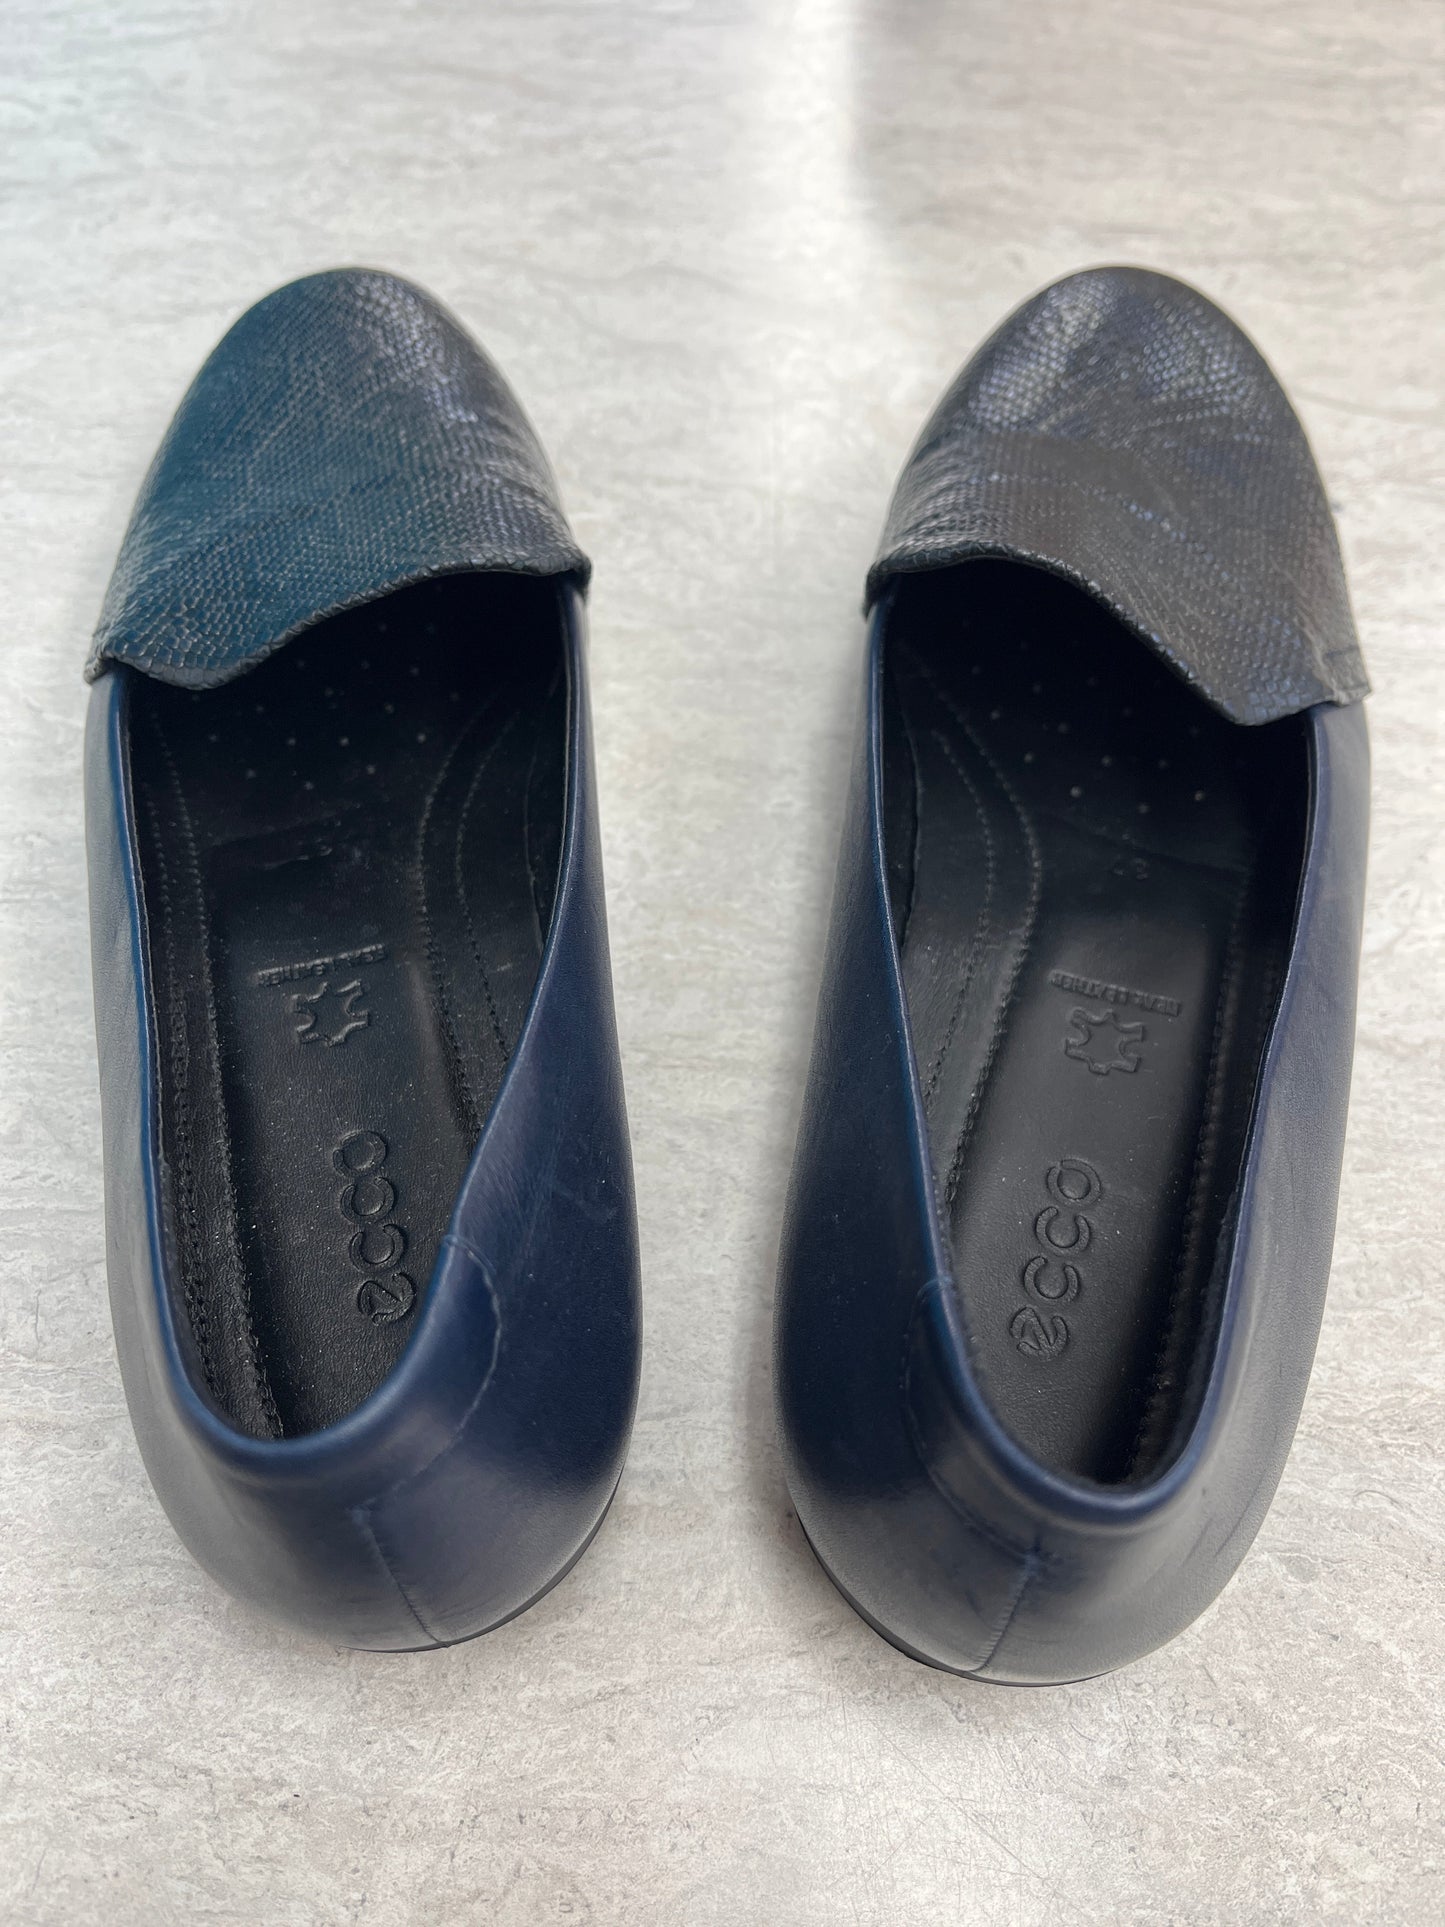 Blue Shoes Flats Ecco, Size 6.5